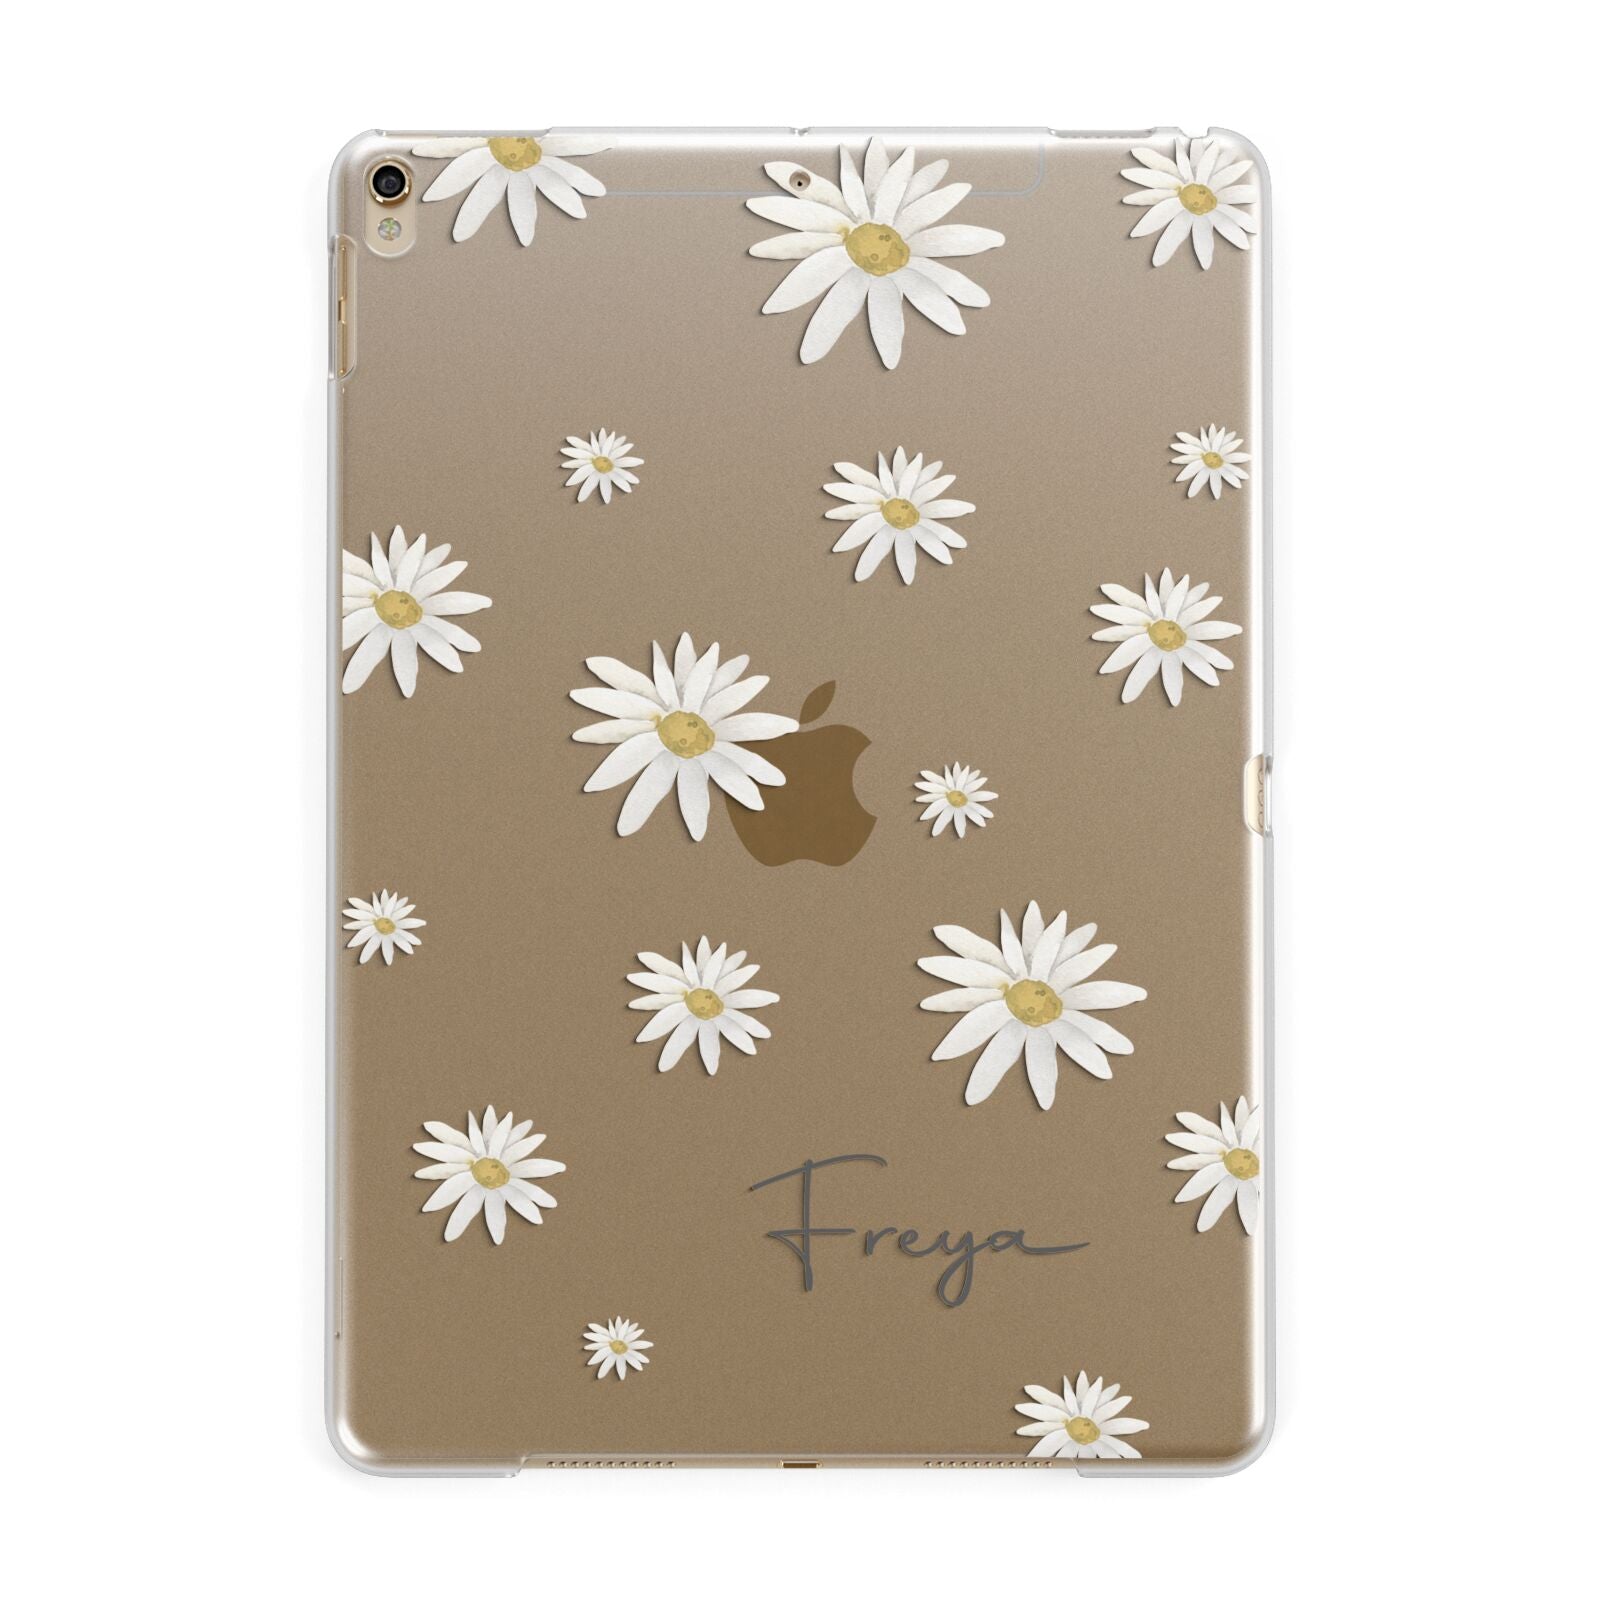 Personalised Vintage Daisy Apple iPad Gold Case